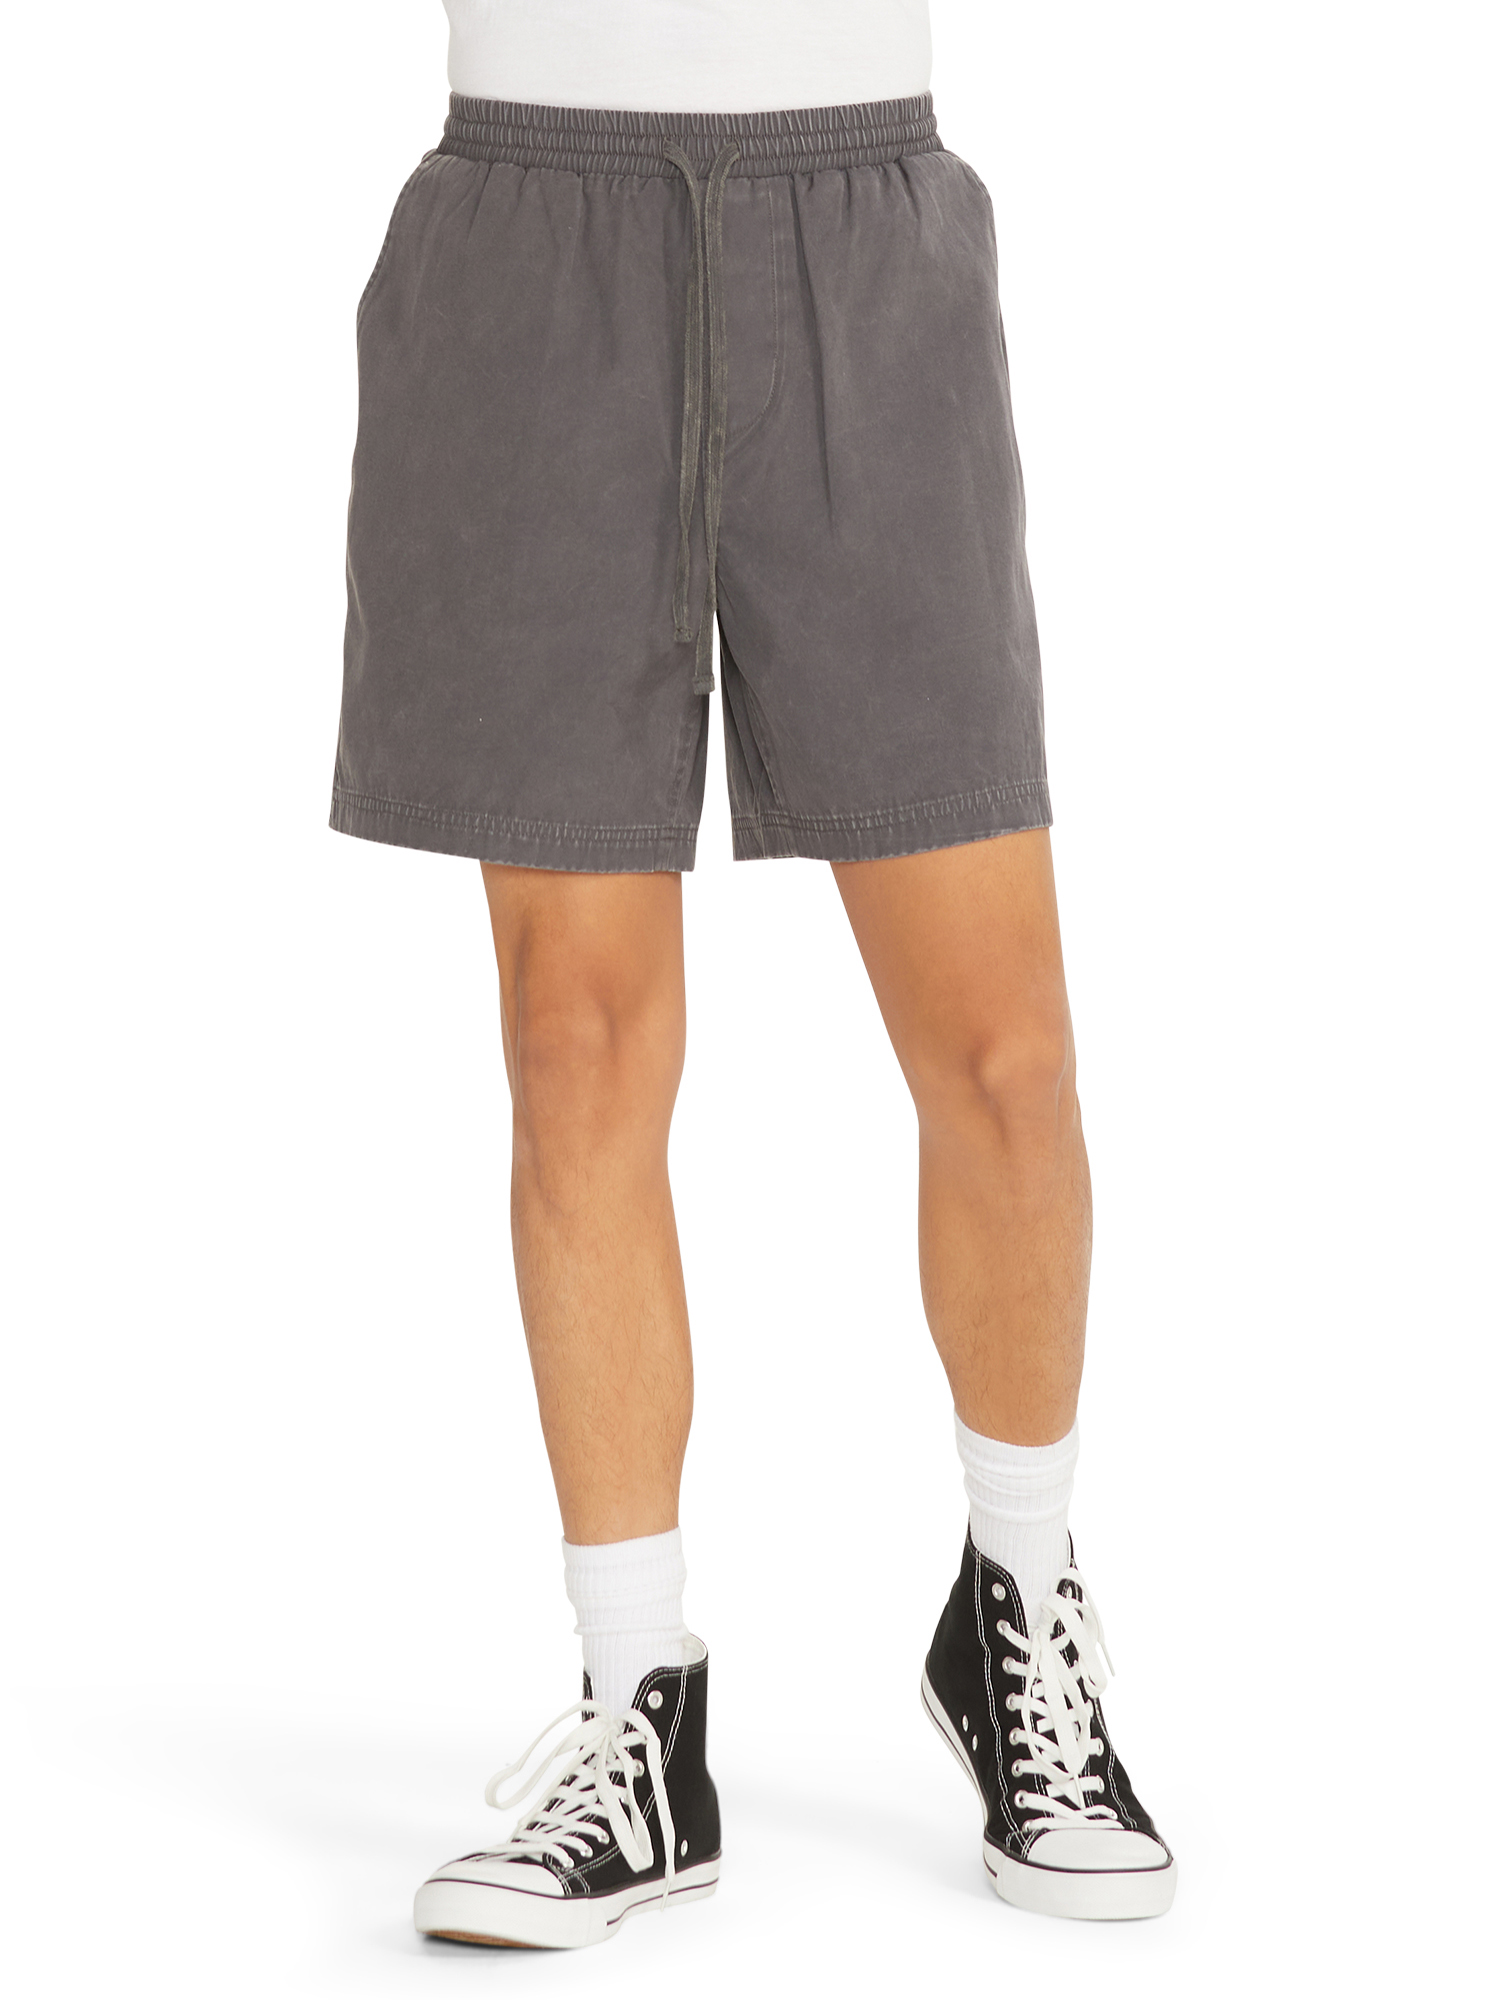 No Boundaries Men's & Big Men's Cotton Twill Shorts, Sizes XS-3XL